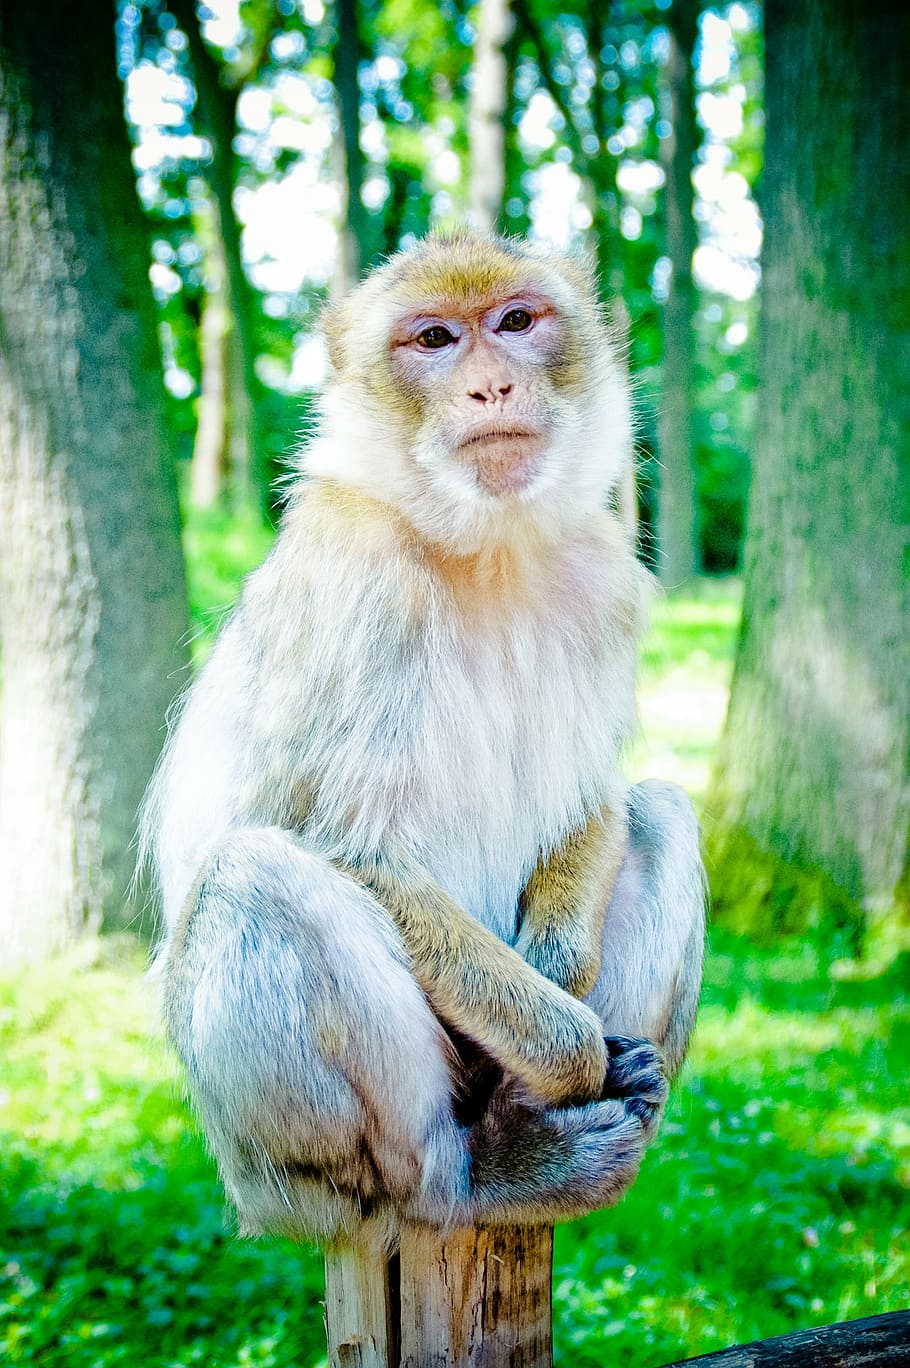 barbary ape, mahogany, makake, macaque species, monkey, old world monkey relatives, primate, animal, zoo, äffchen